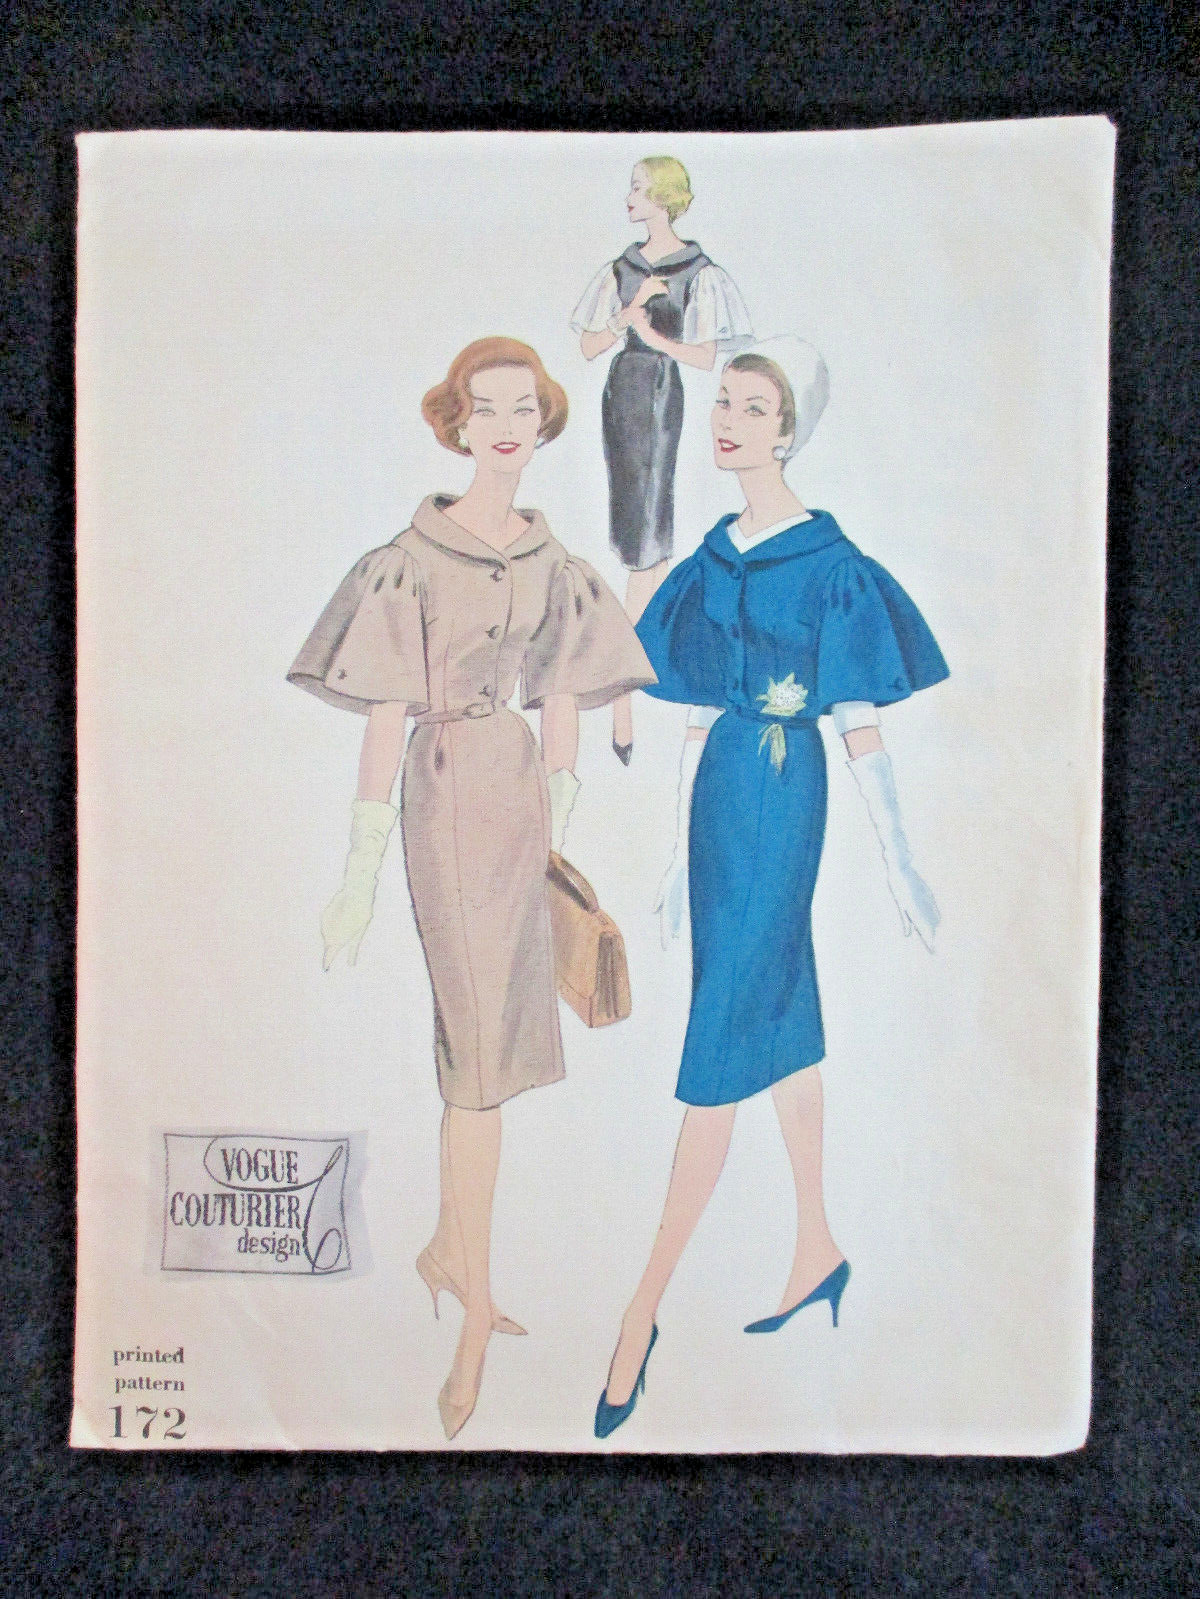 Vintage 1959 Vogue Couturier Design Printed Pattern No. 172 Size 10 ~ Cut